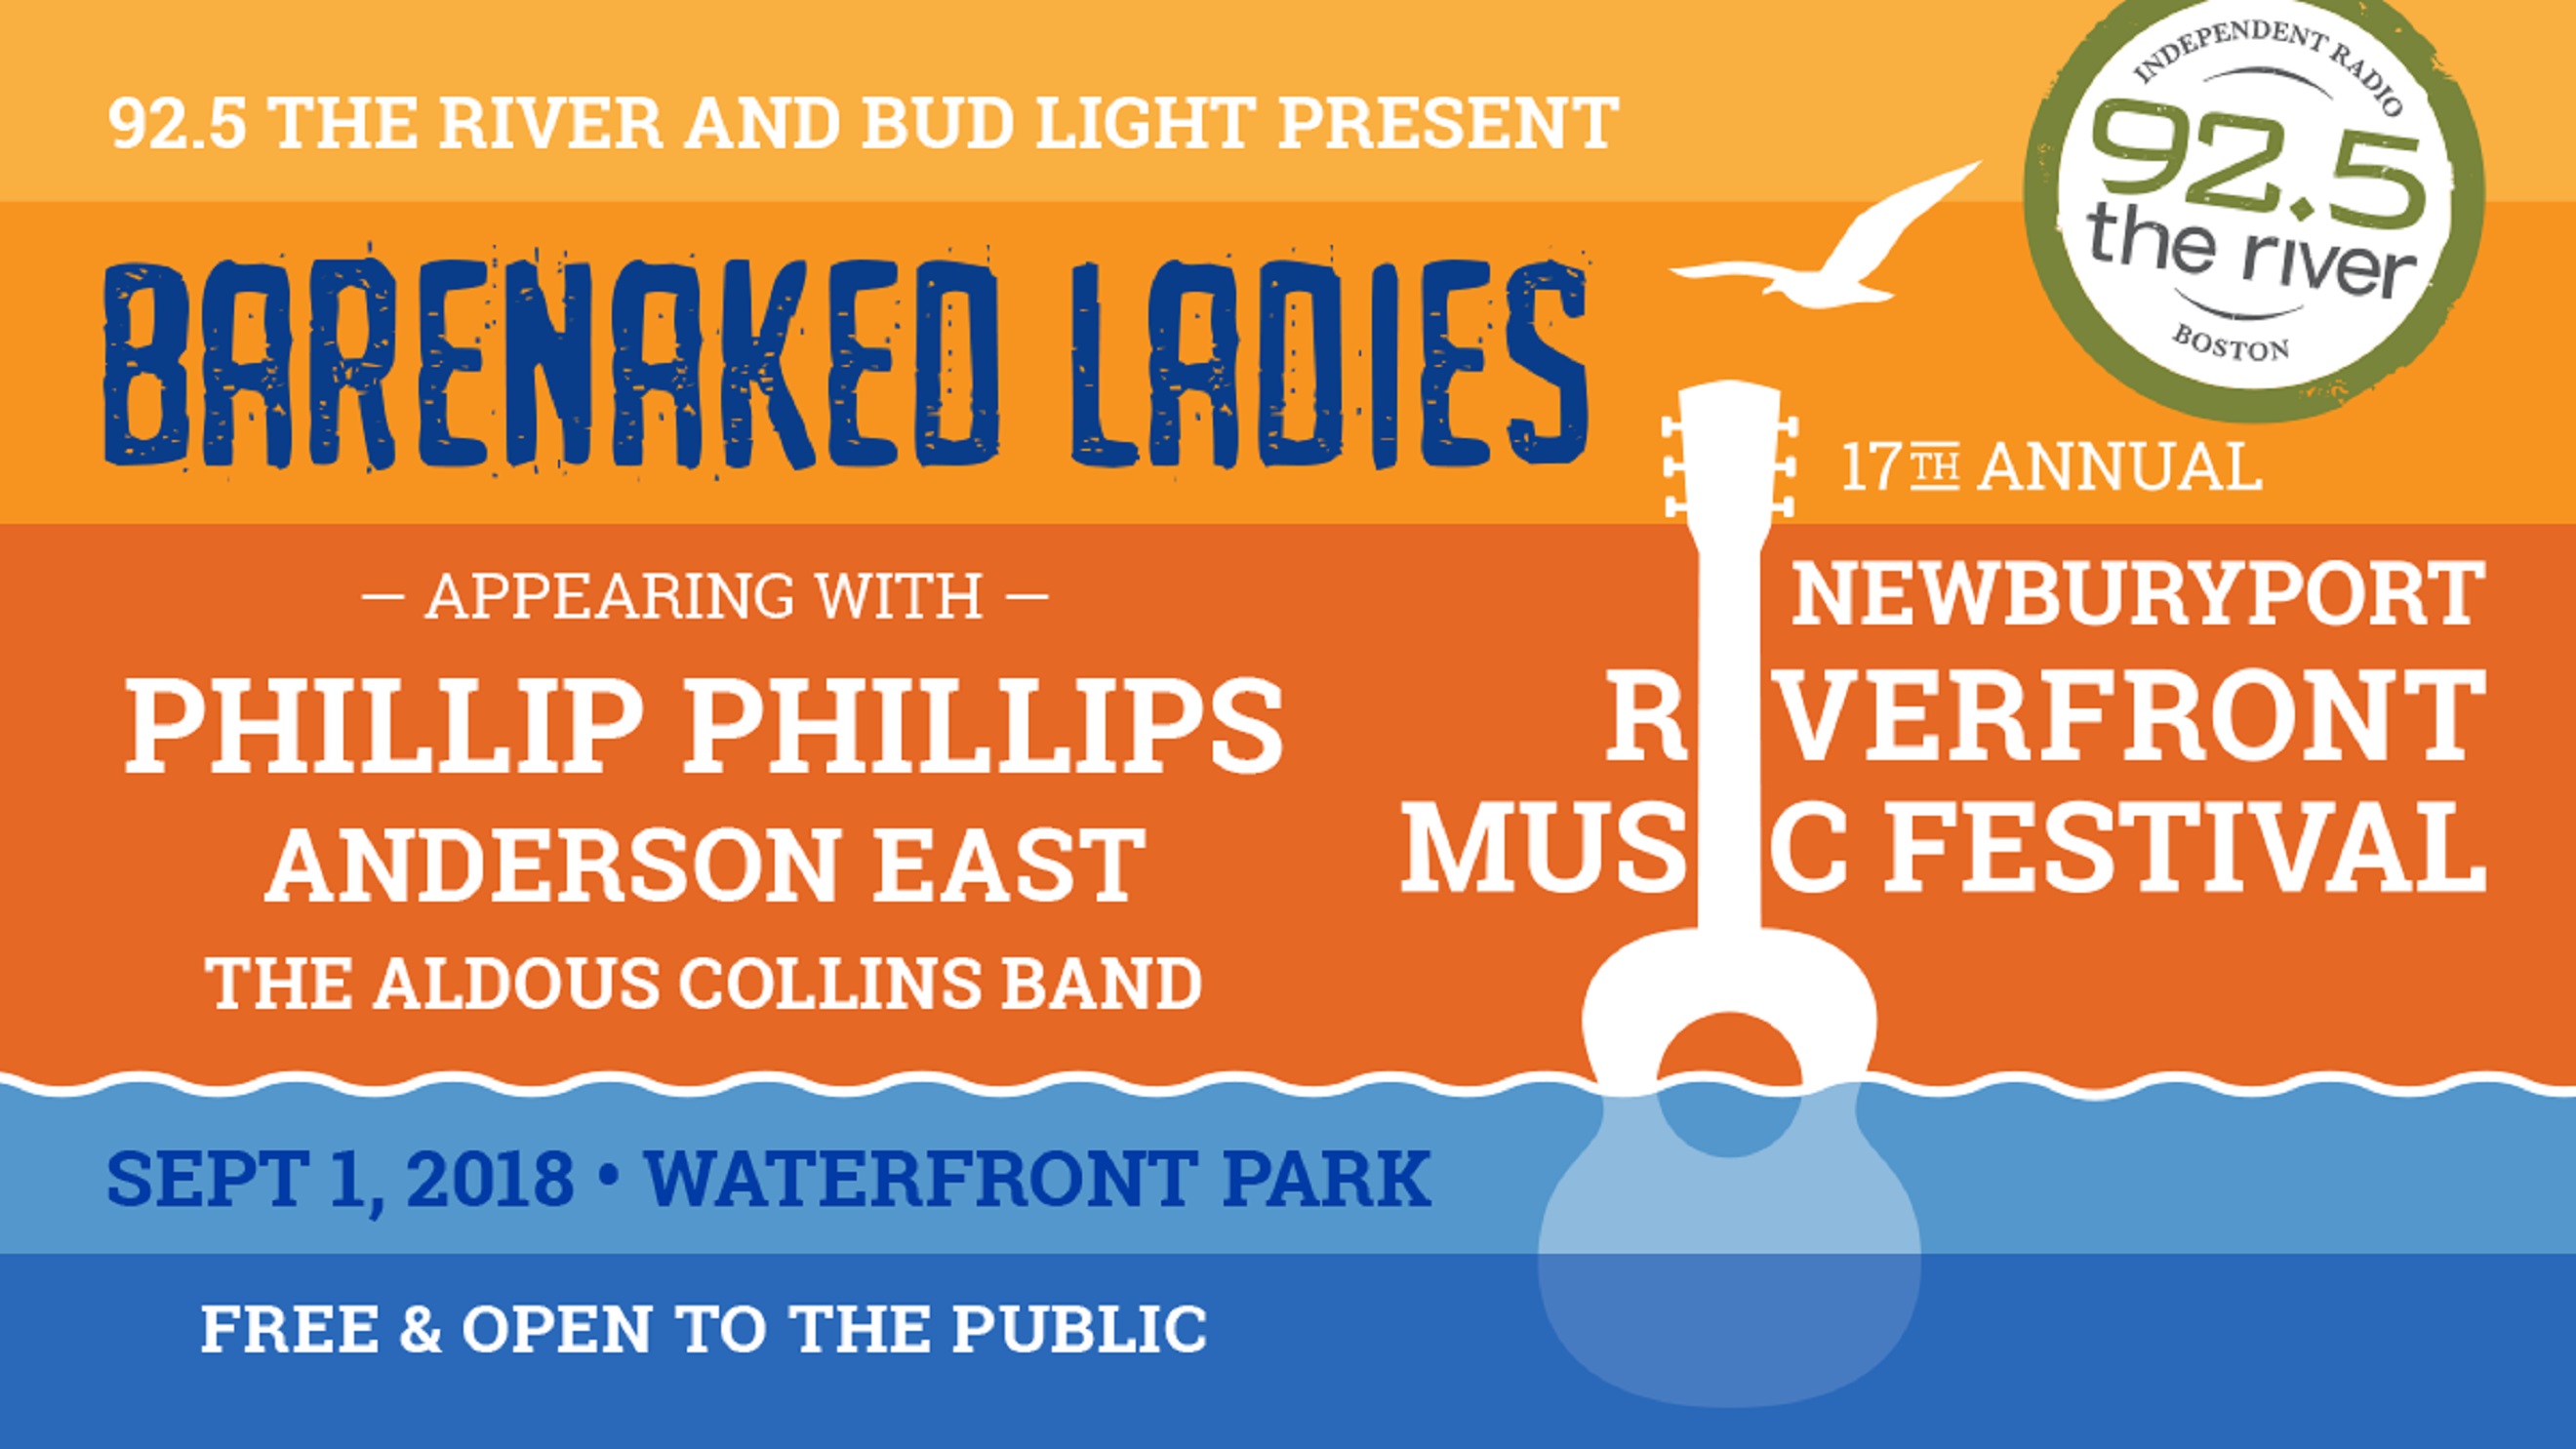 Barenaked Ladies to headline The River’s Free 17th Annual Newburyport